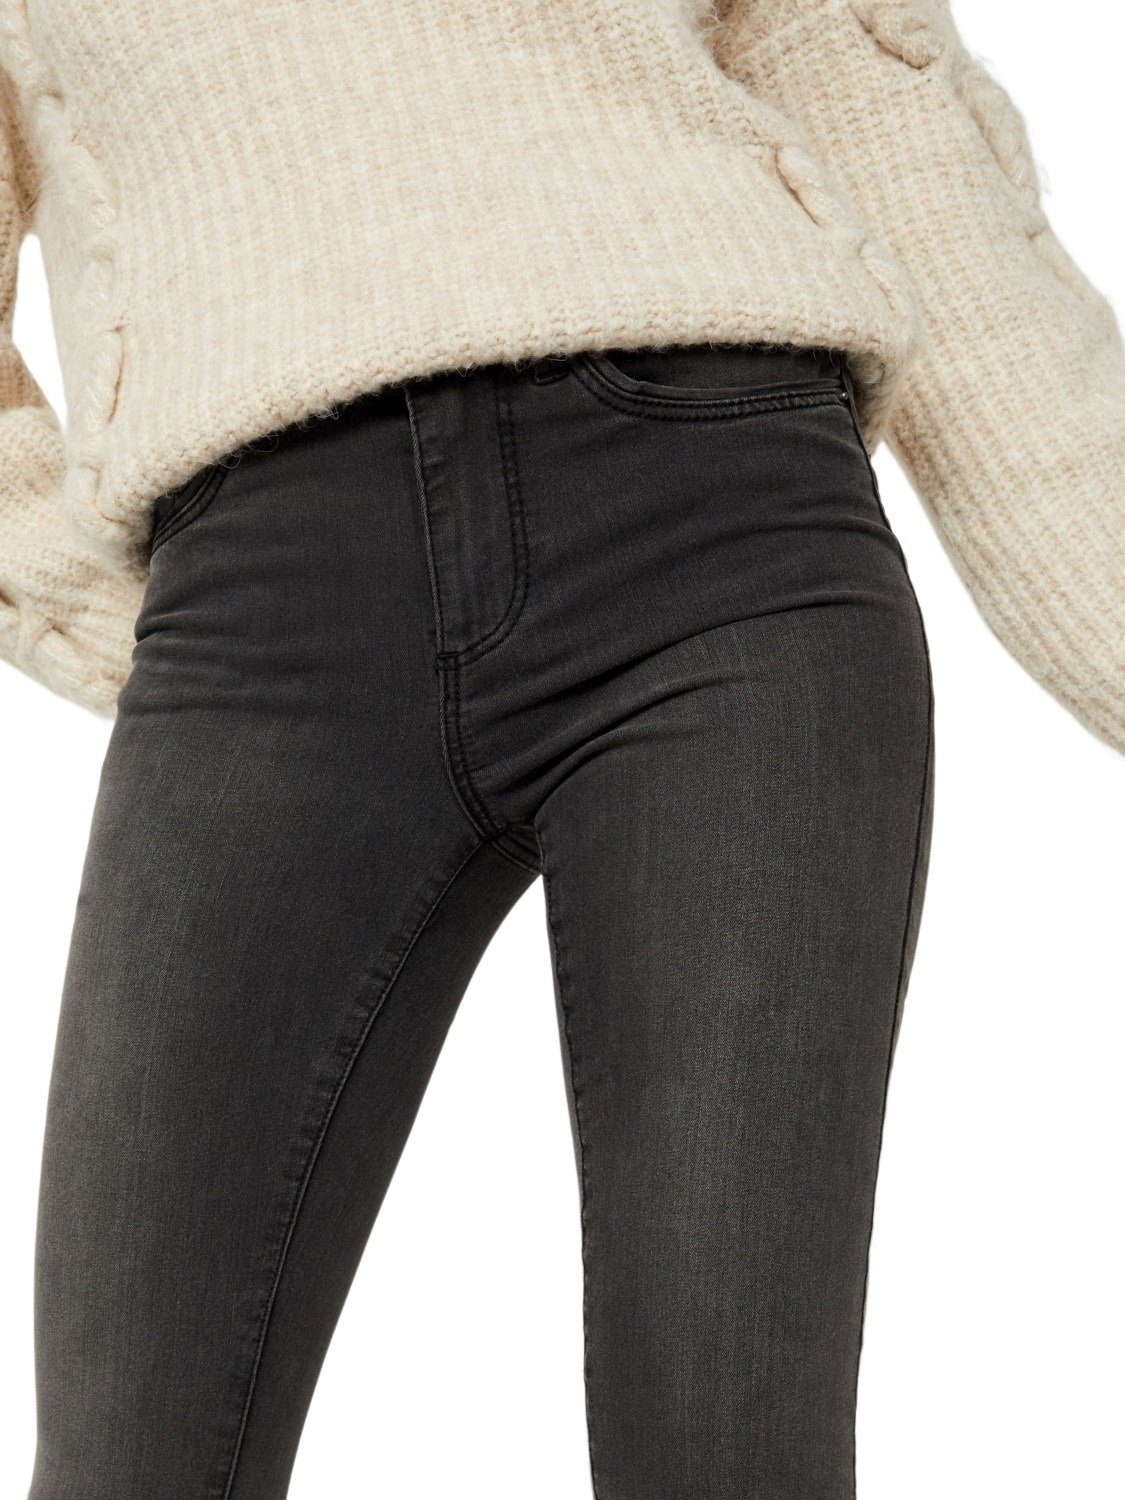 JEANS Skinny-fit-Jeans MR PIPING Vero S VI207 Moda Jeanshose mit VMTANYA Stretch